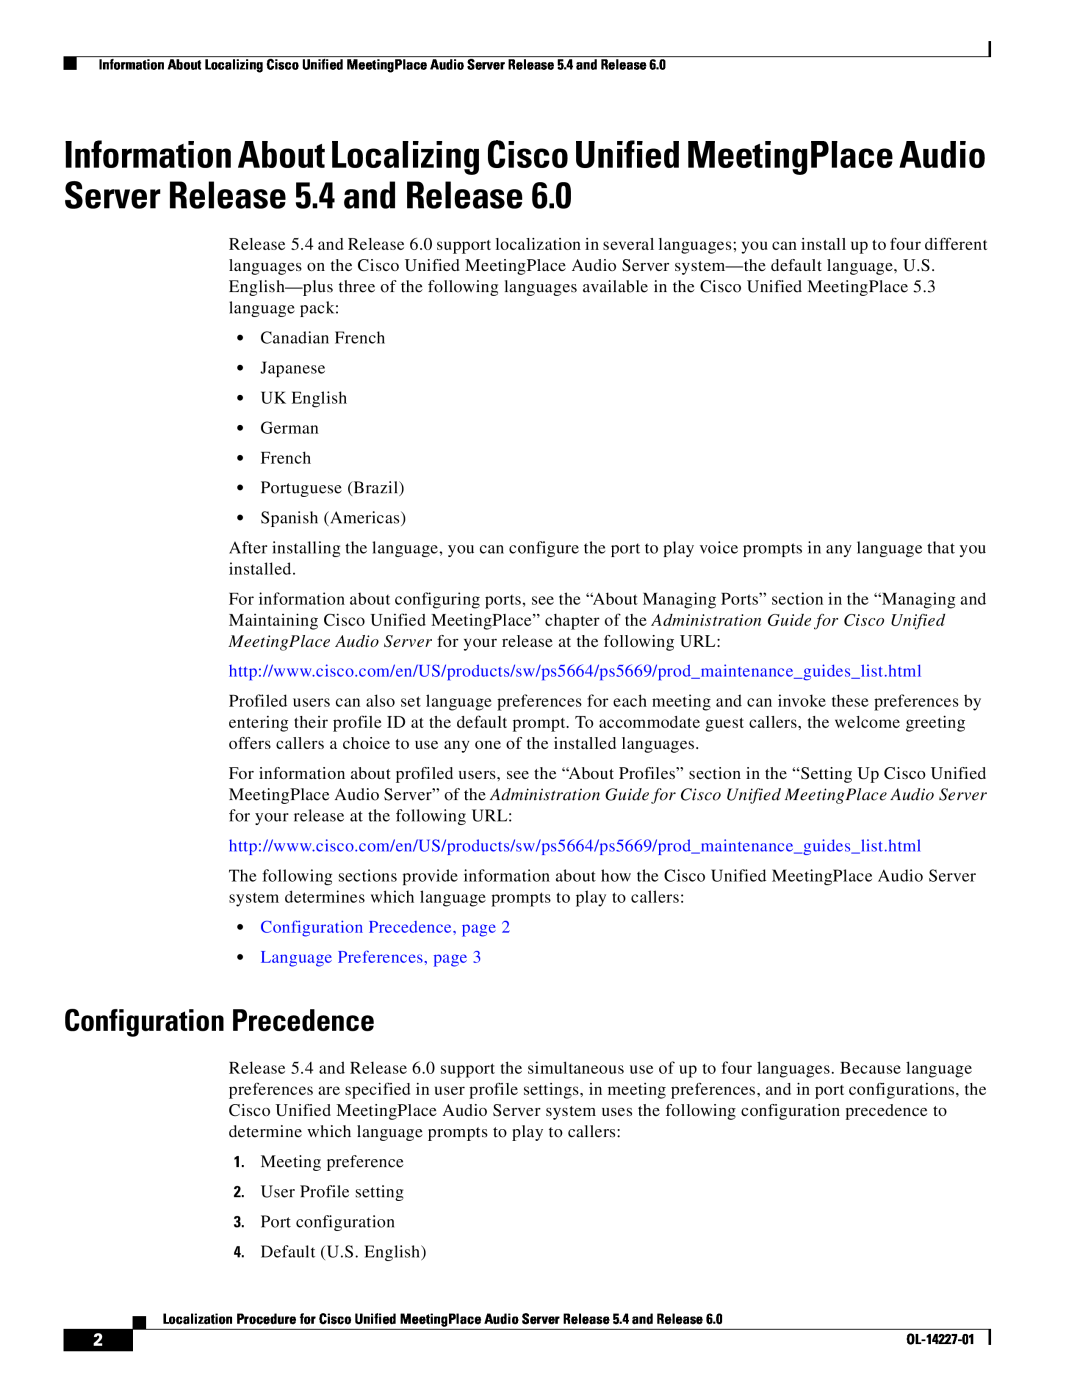 Cisco Systems 5.4, 6 manual Configuration Precedence, page Language Preferences, page 